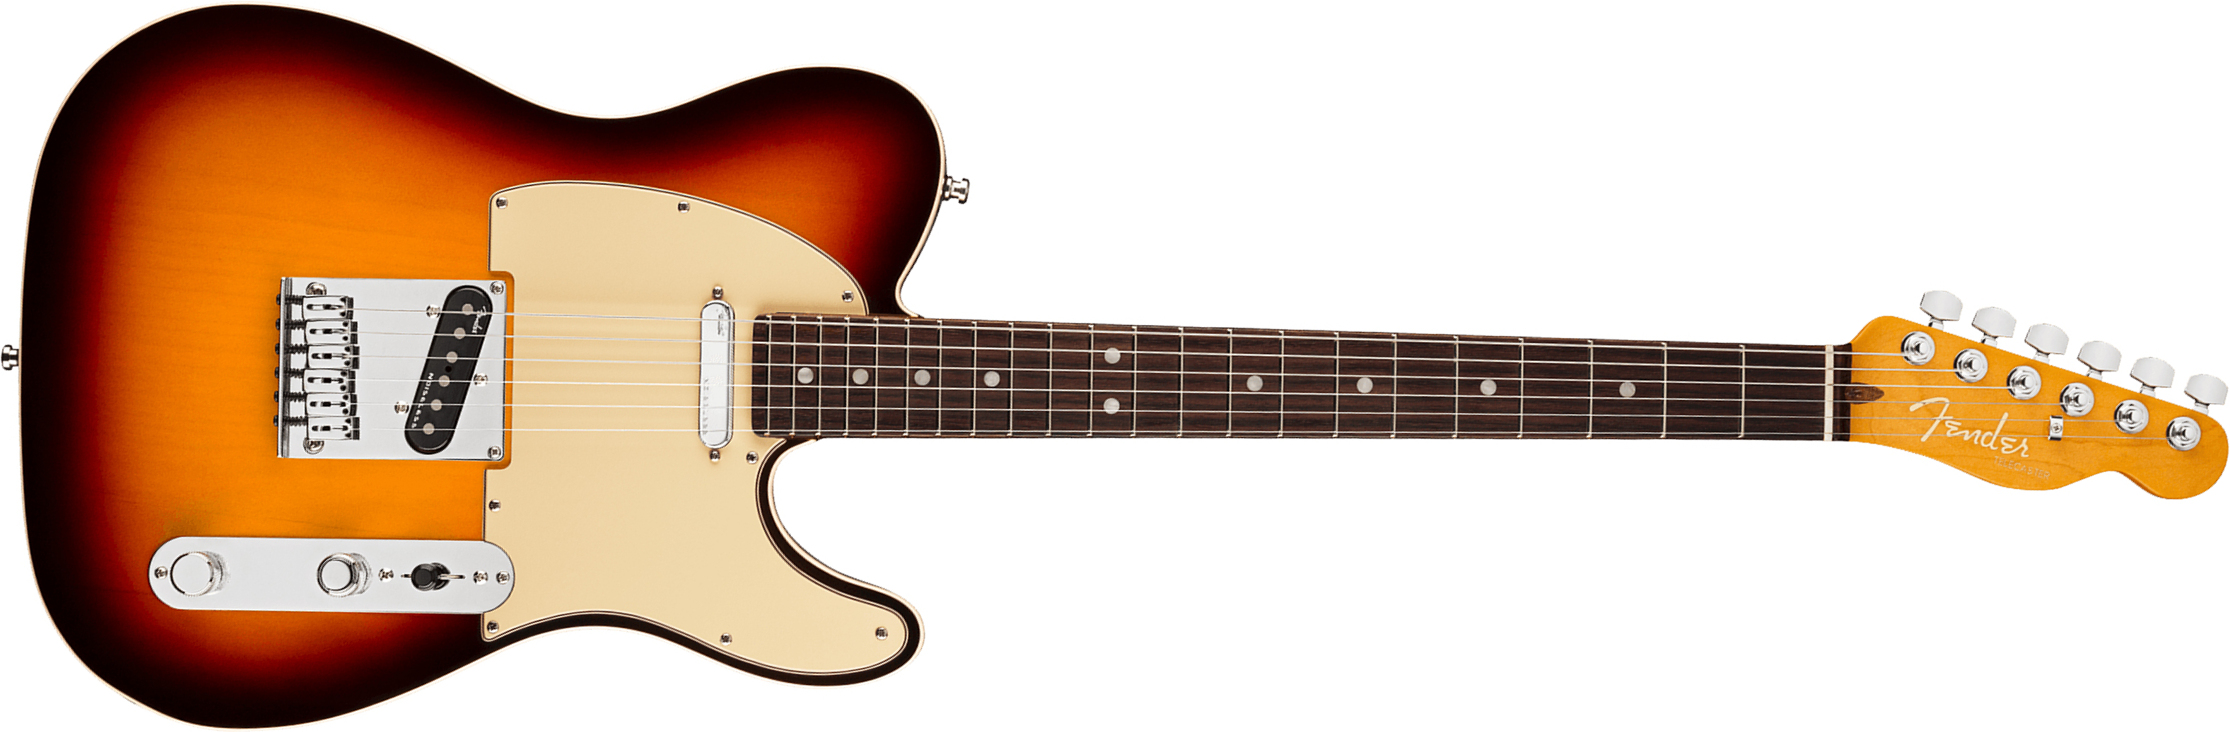 Fender Tele American Ultra 2019 Usa Rw - Ultraburst - Tel shape electric guitar - Main picture